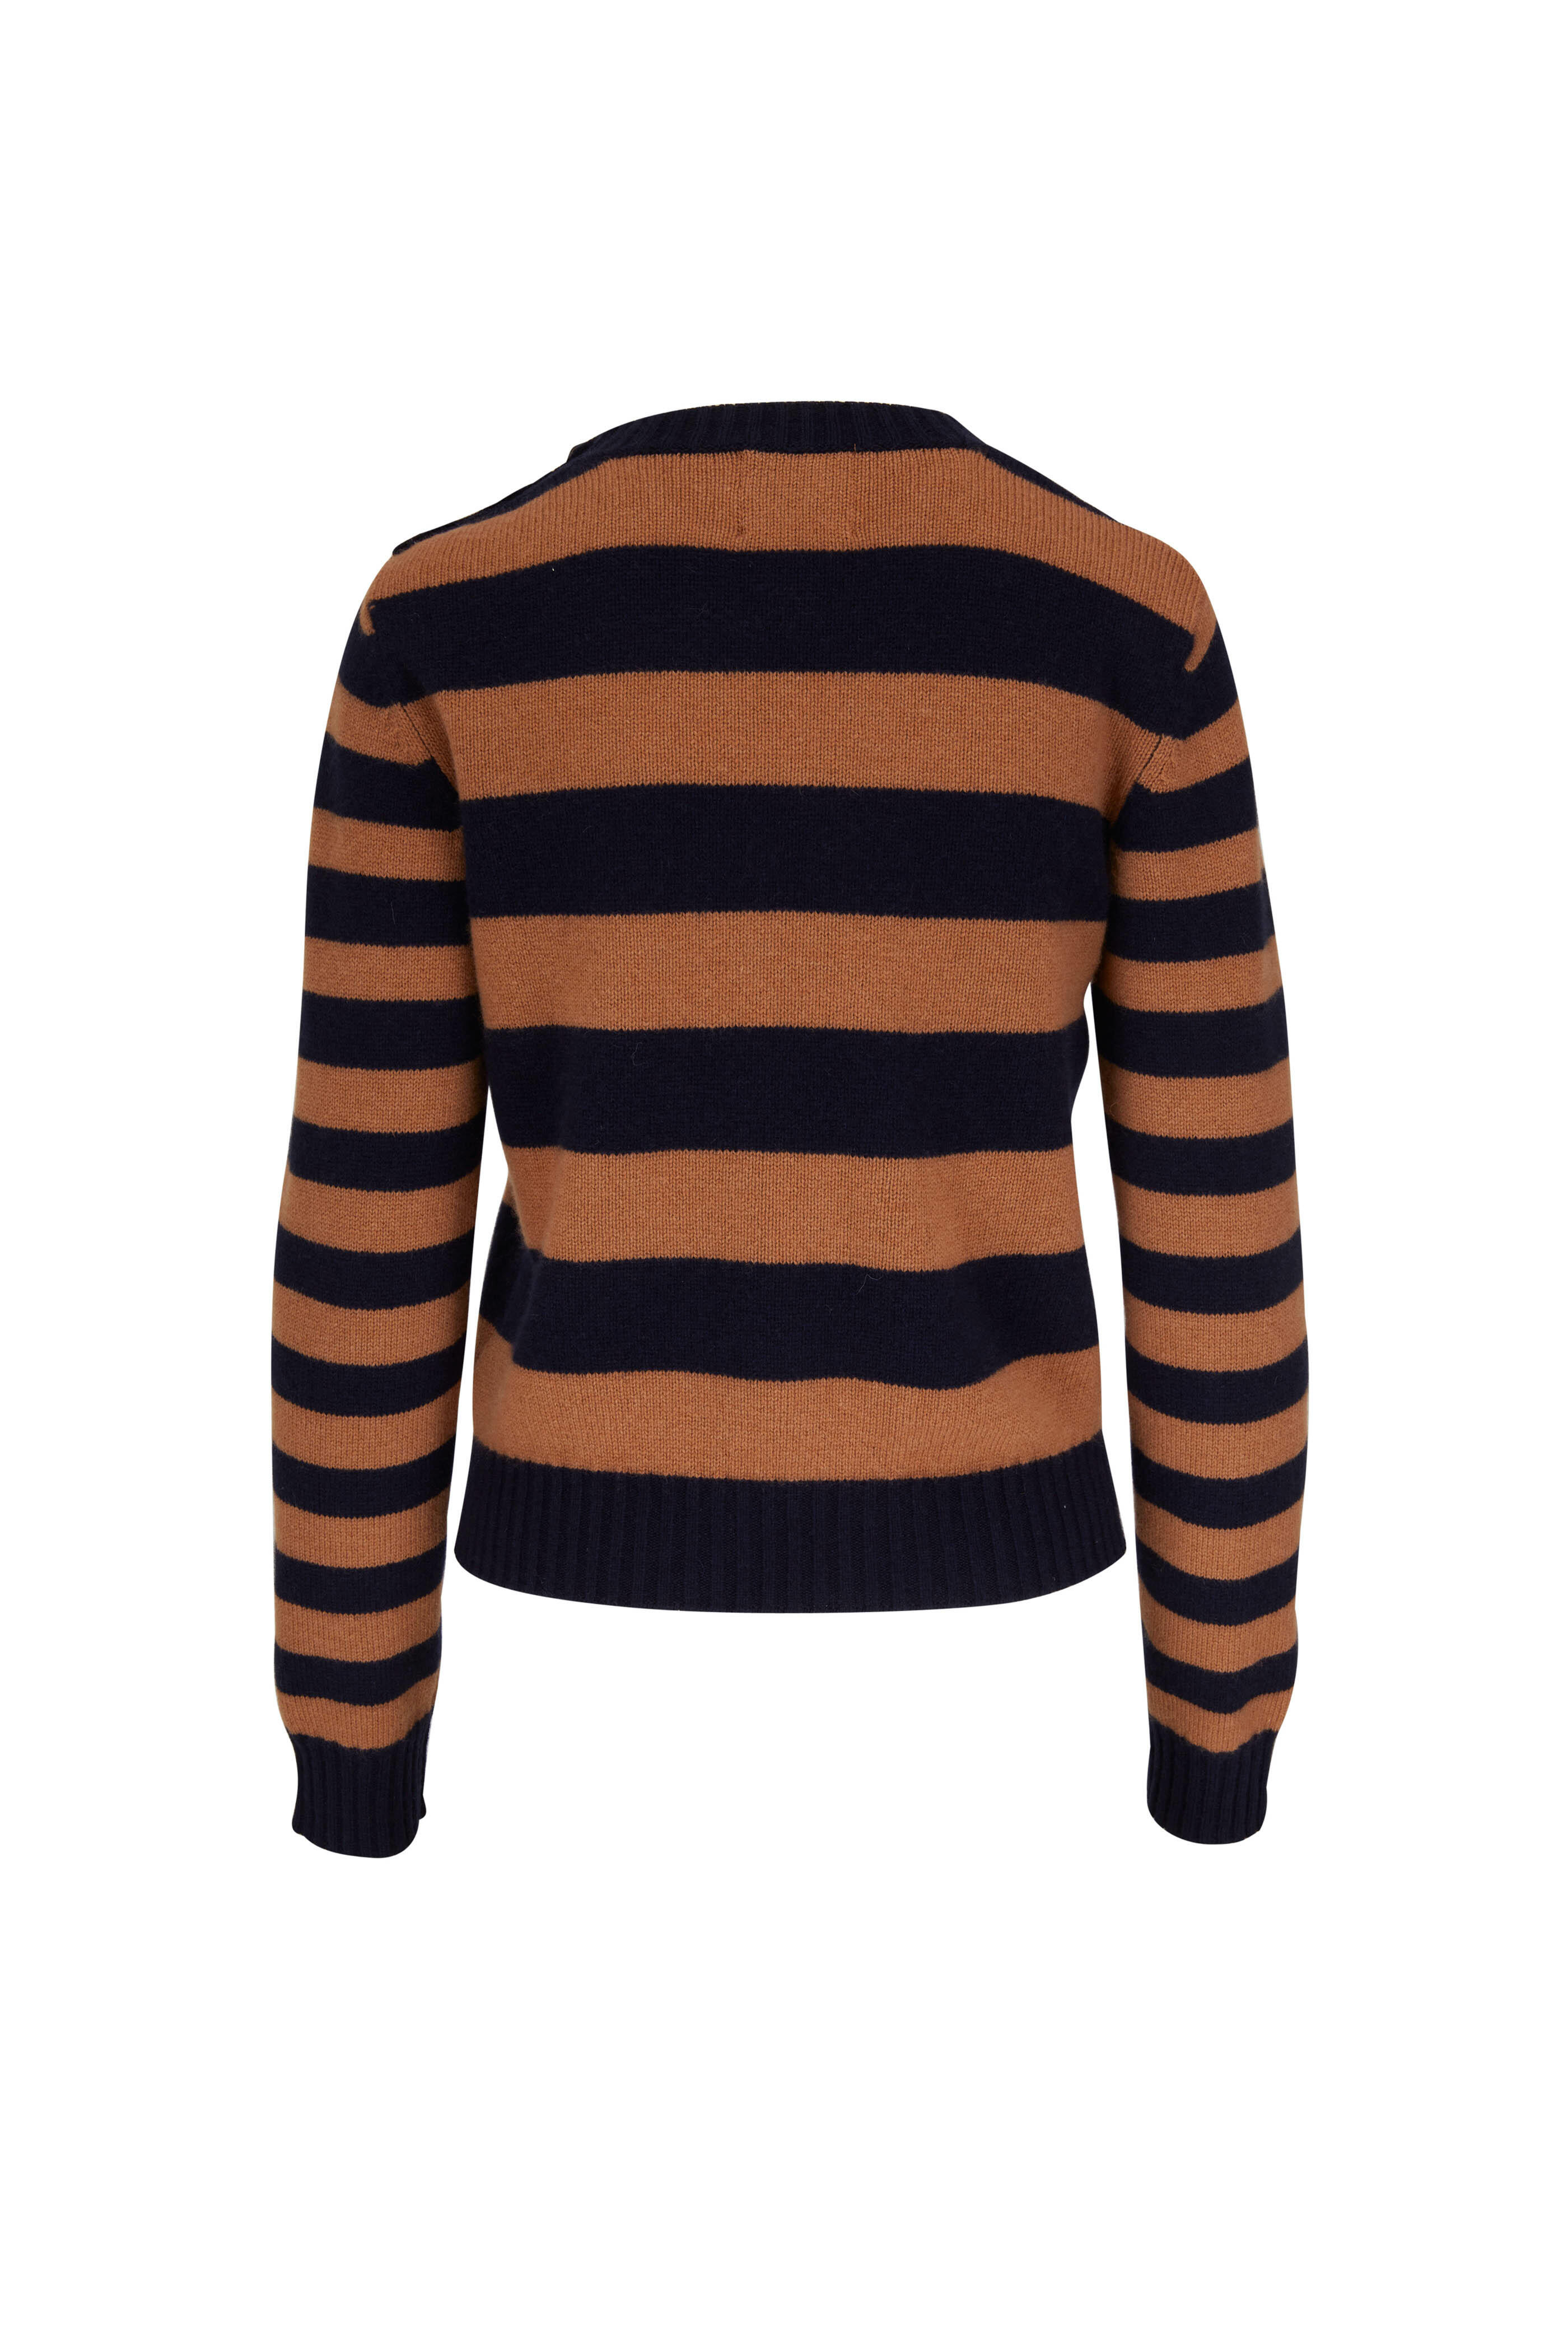 Jumper 1234 - Navy Sweater Cashmere & Camel Stripe